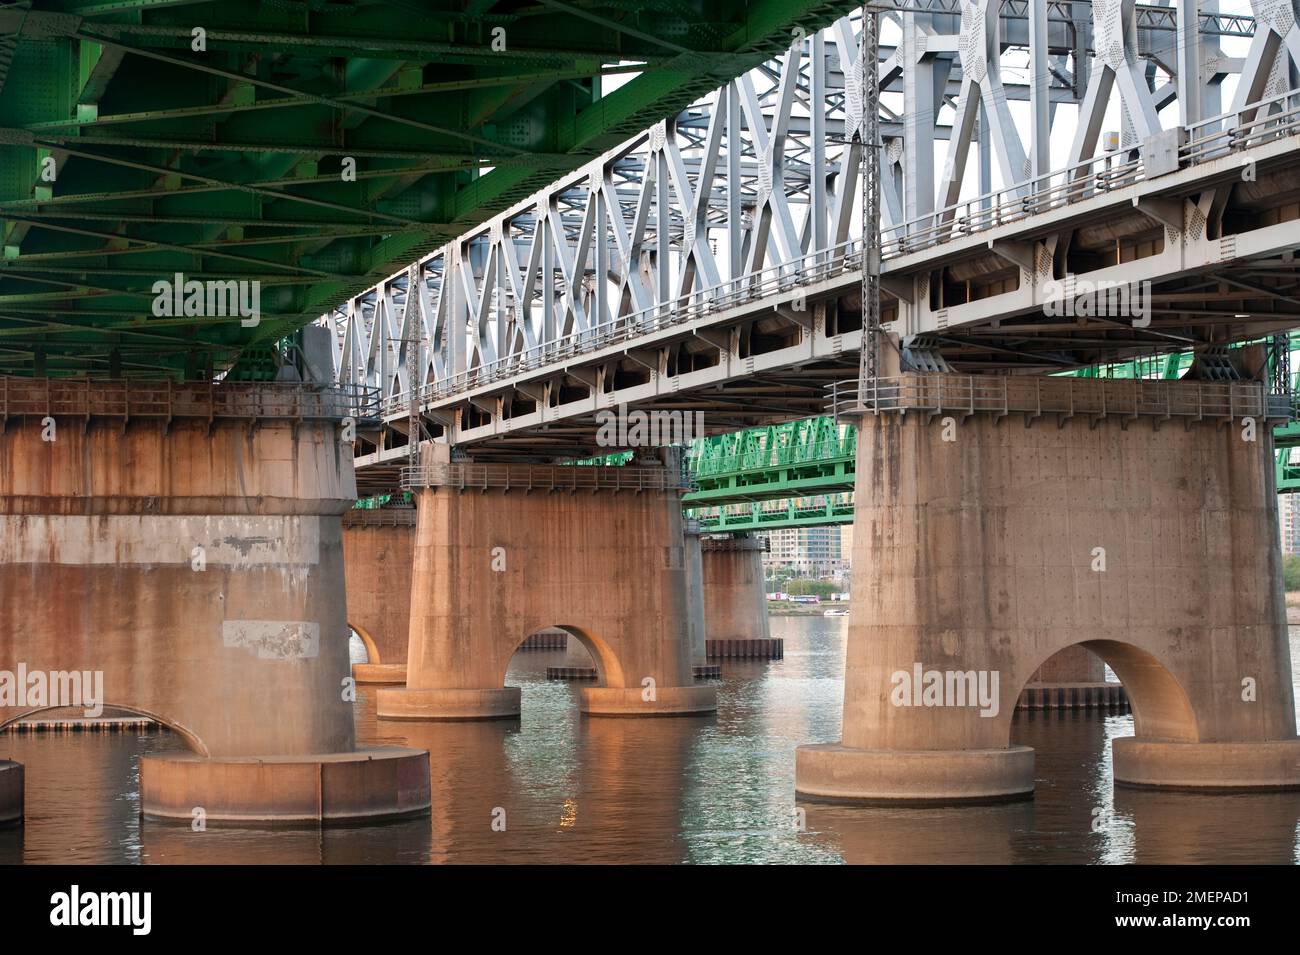 South Korea, Seoul, Hangangcheolgyo (Railway Bridge) Stock Photo